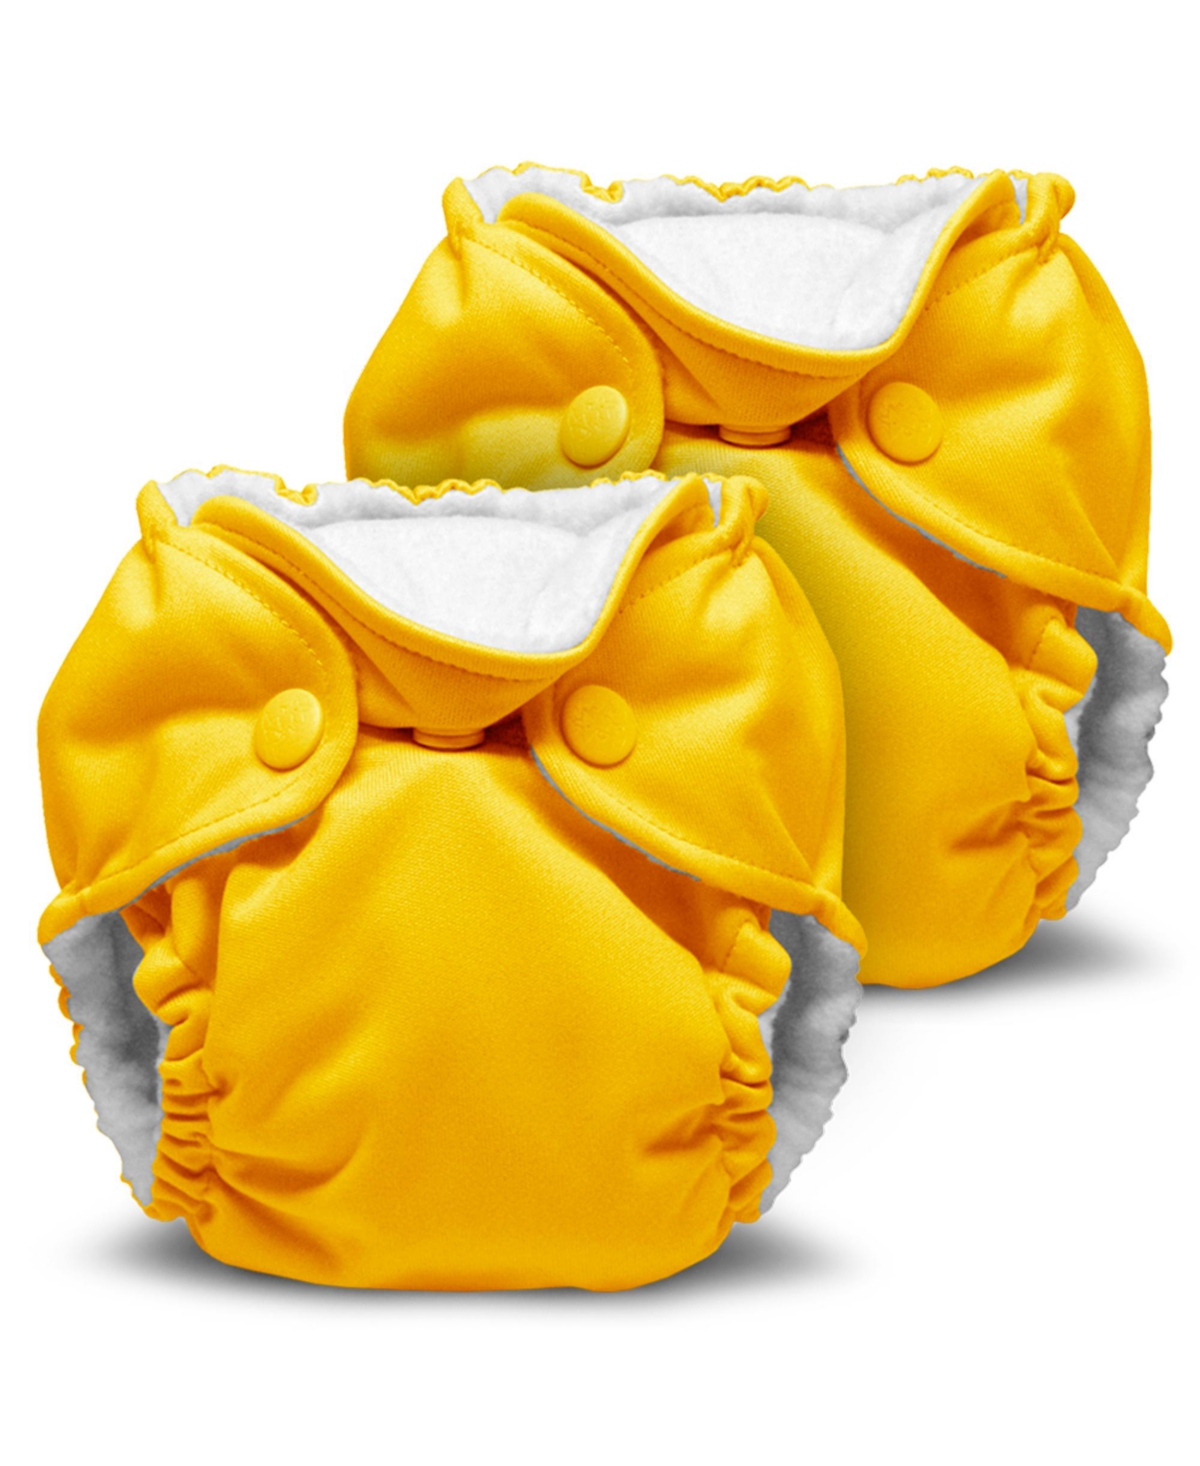 Kanga Care Babies' Lil Joey Newborn All In One Aio Cloth Diaper (2pk) In Dandelion